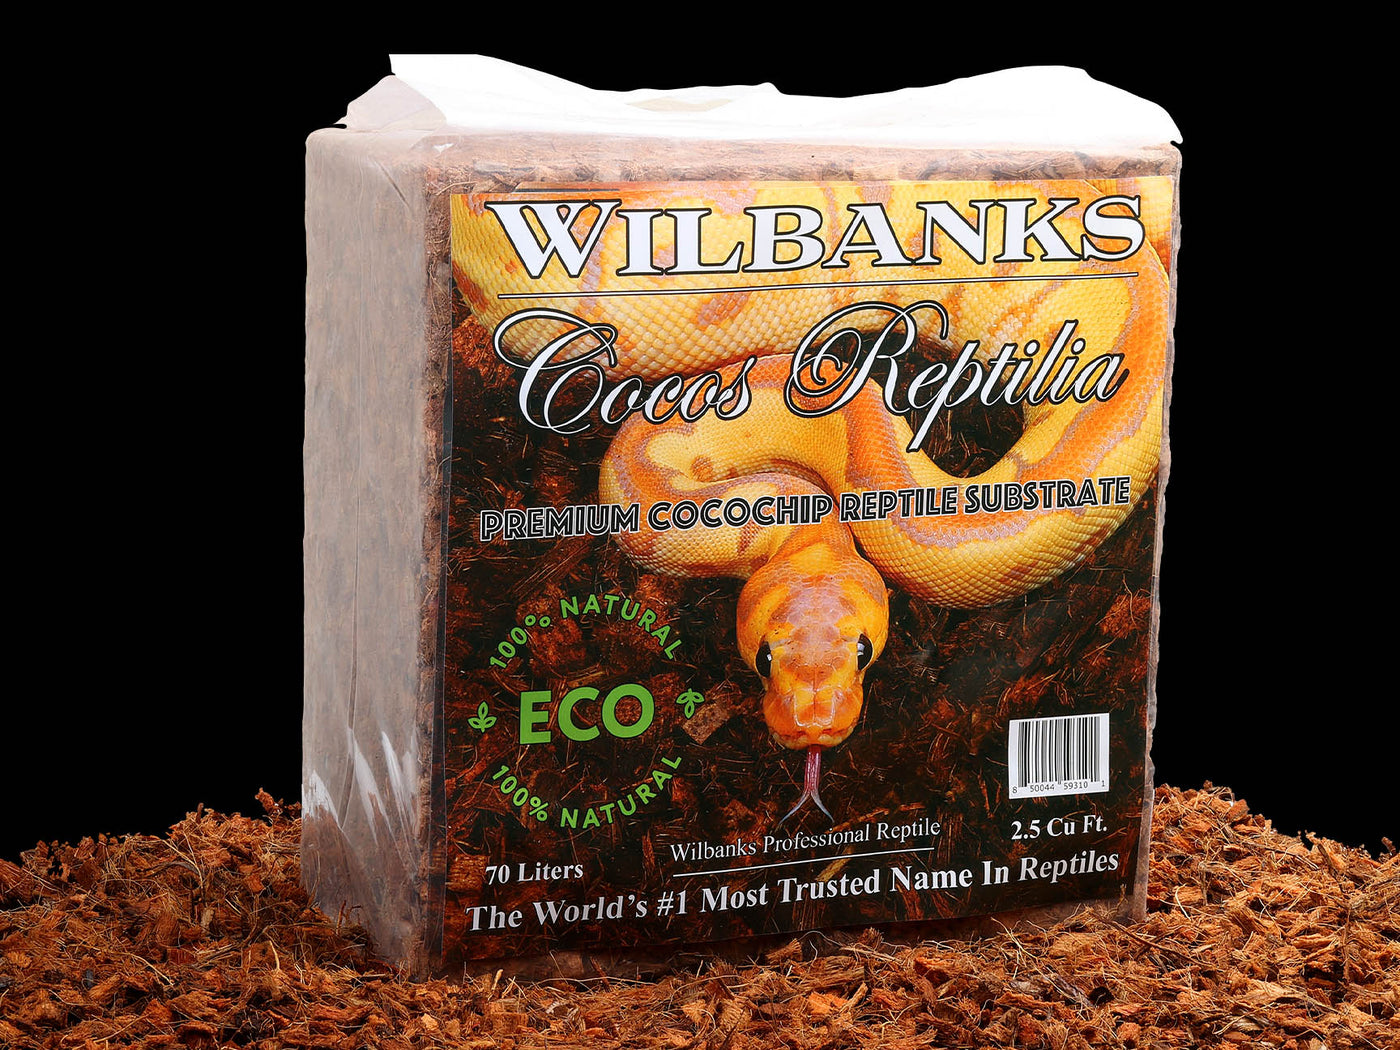 Wilbanks Cocos Reptilia Premium Coco Chip Reptile Substrate